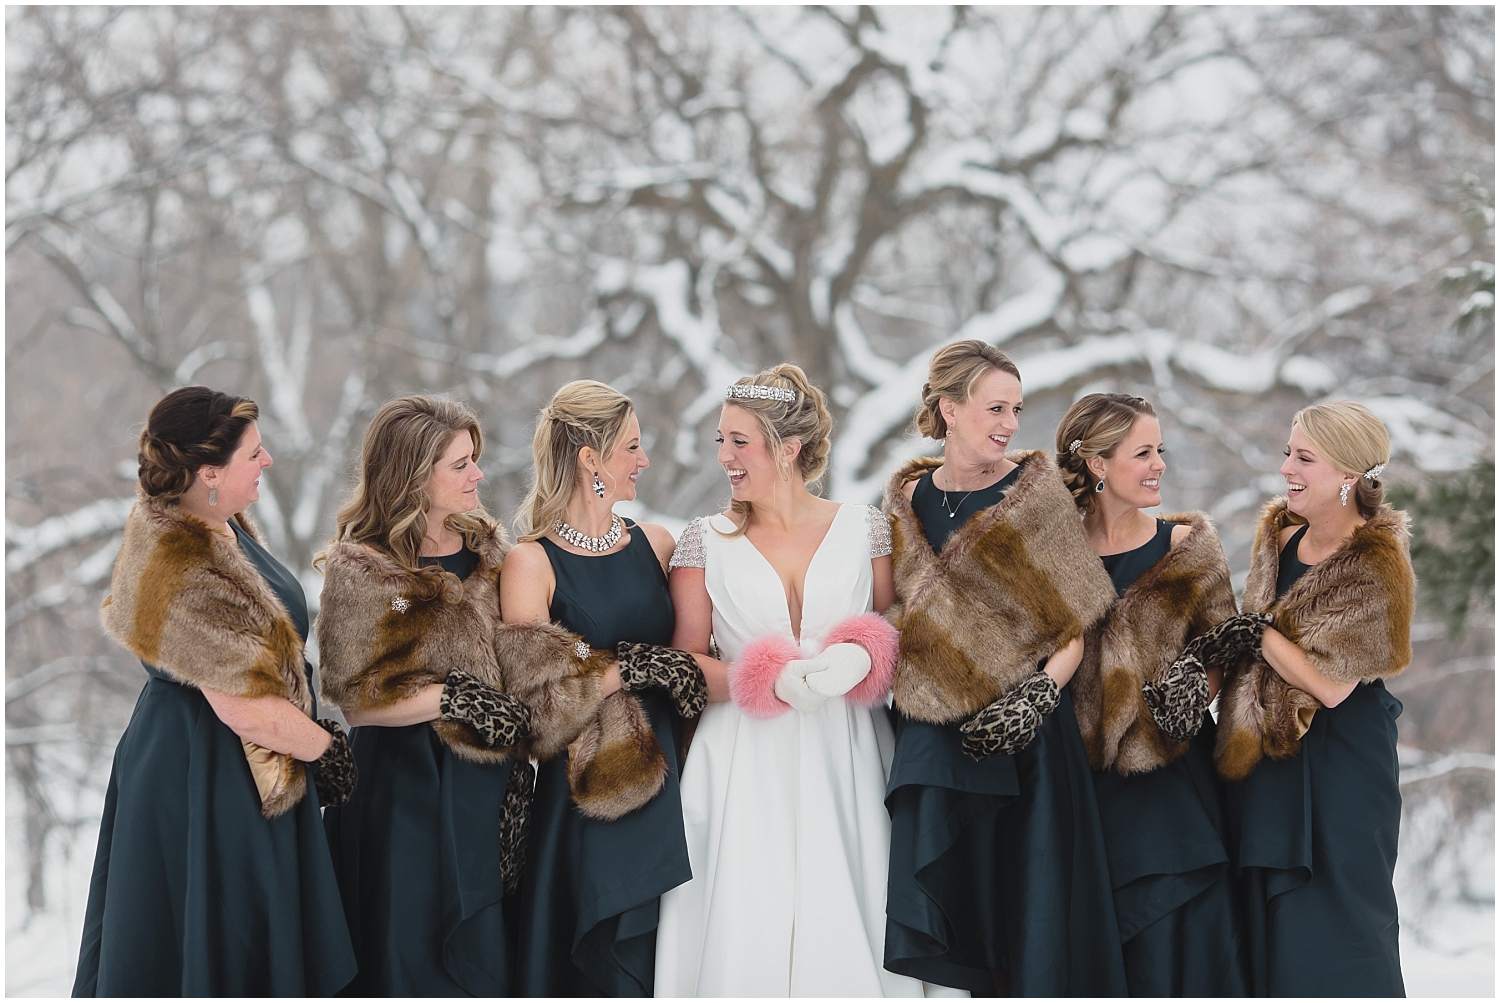  Minnesota Wedding Planner, Mpls Wedding Planner, Machine Shop MPLS, Mpls Wedding Venue,   Bride with her bridesmaids in the Winter Snow 